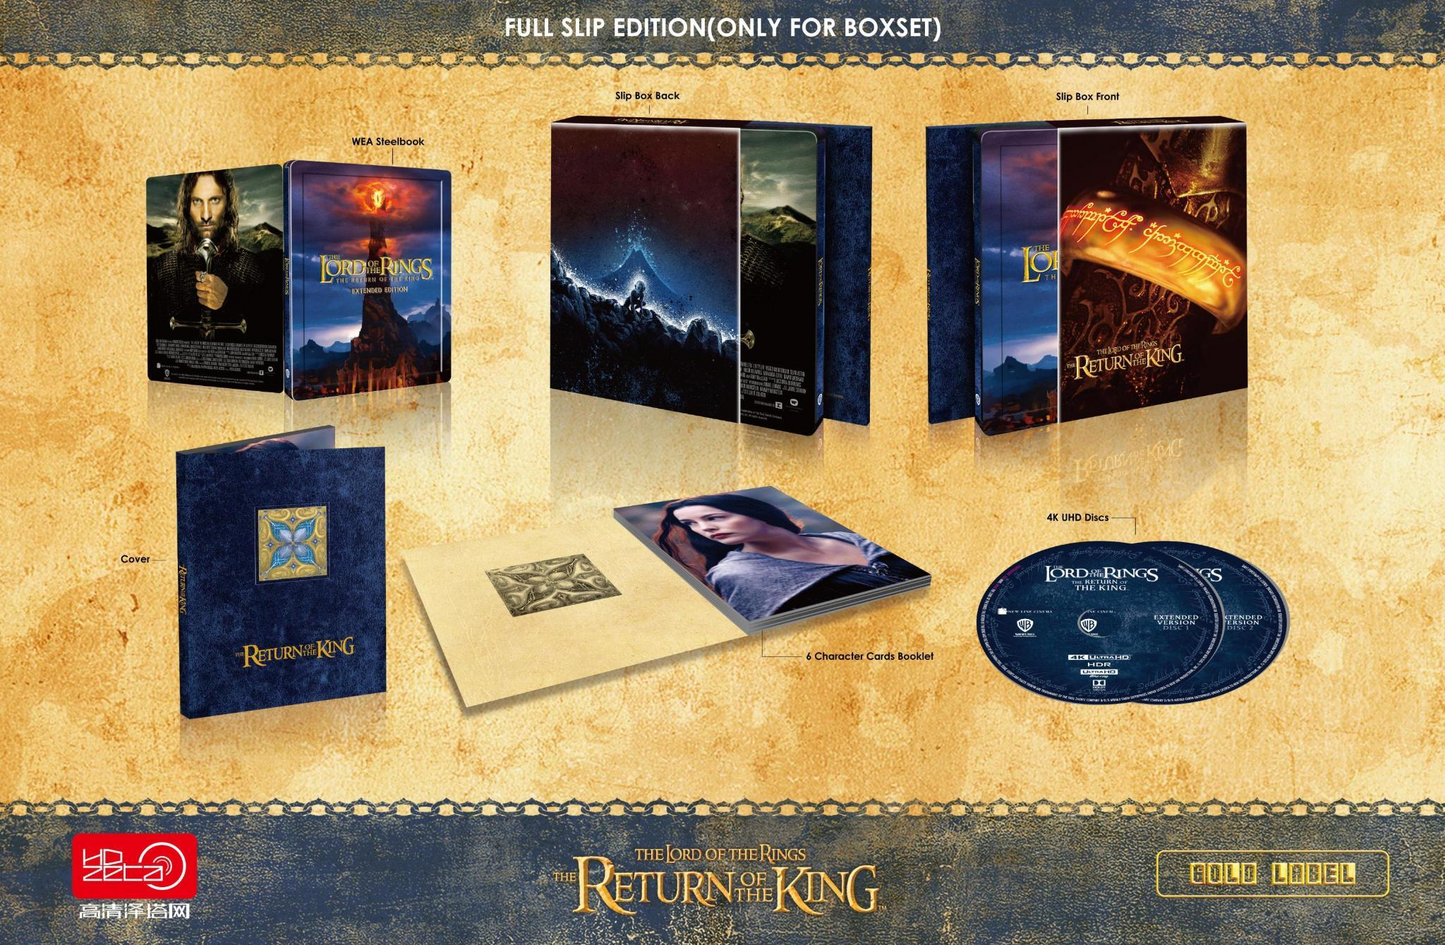 Lord Of The Rings Trilogy 4K Blu-ray Steelbook HDZeta Exclusive Gold Label Full Slip Set